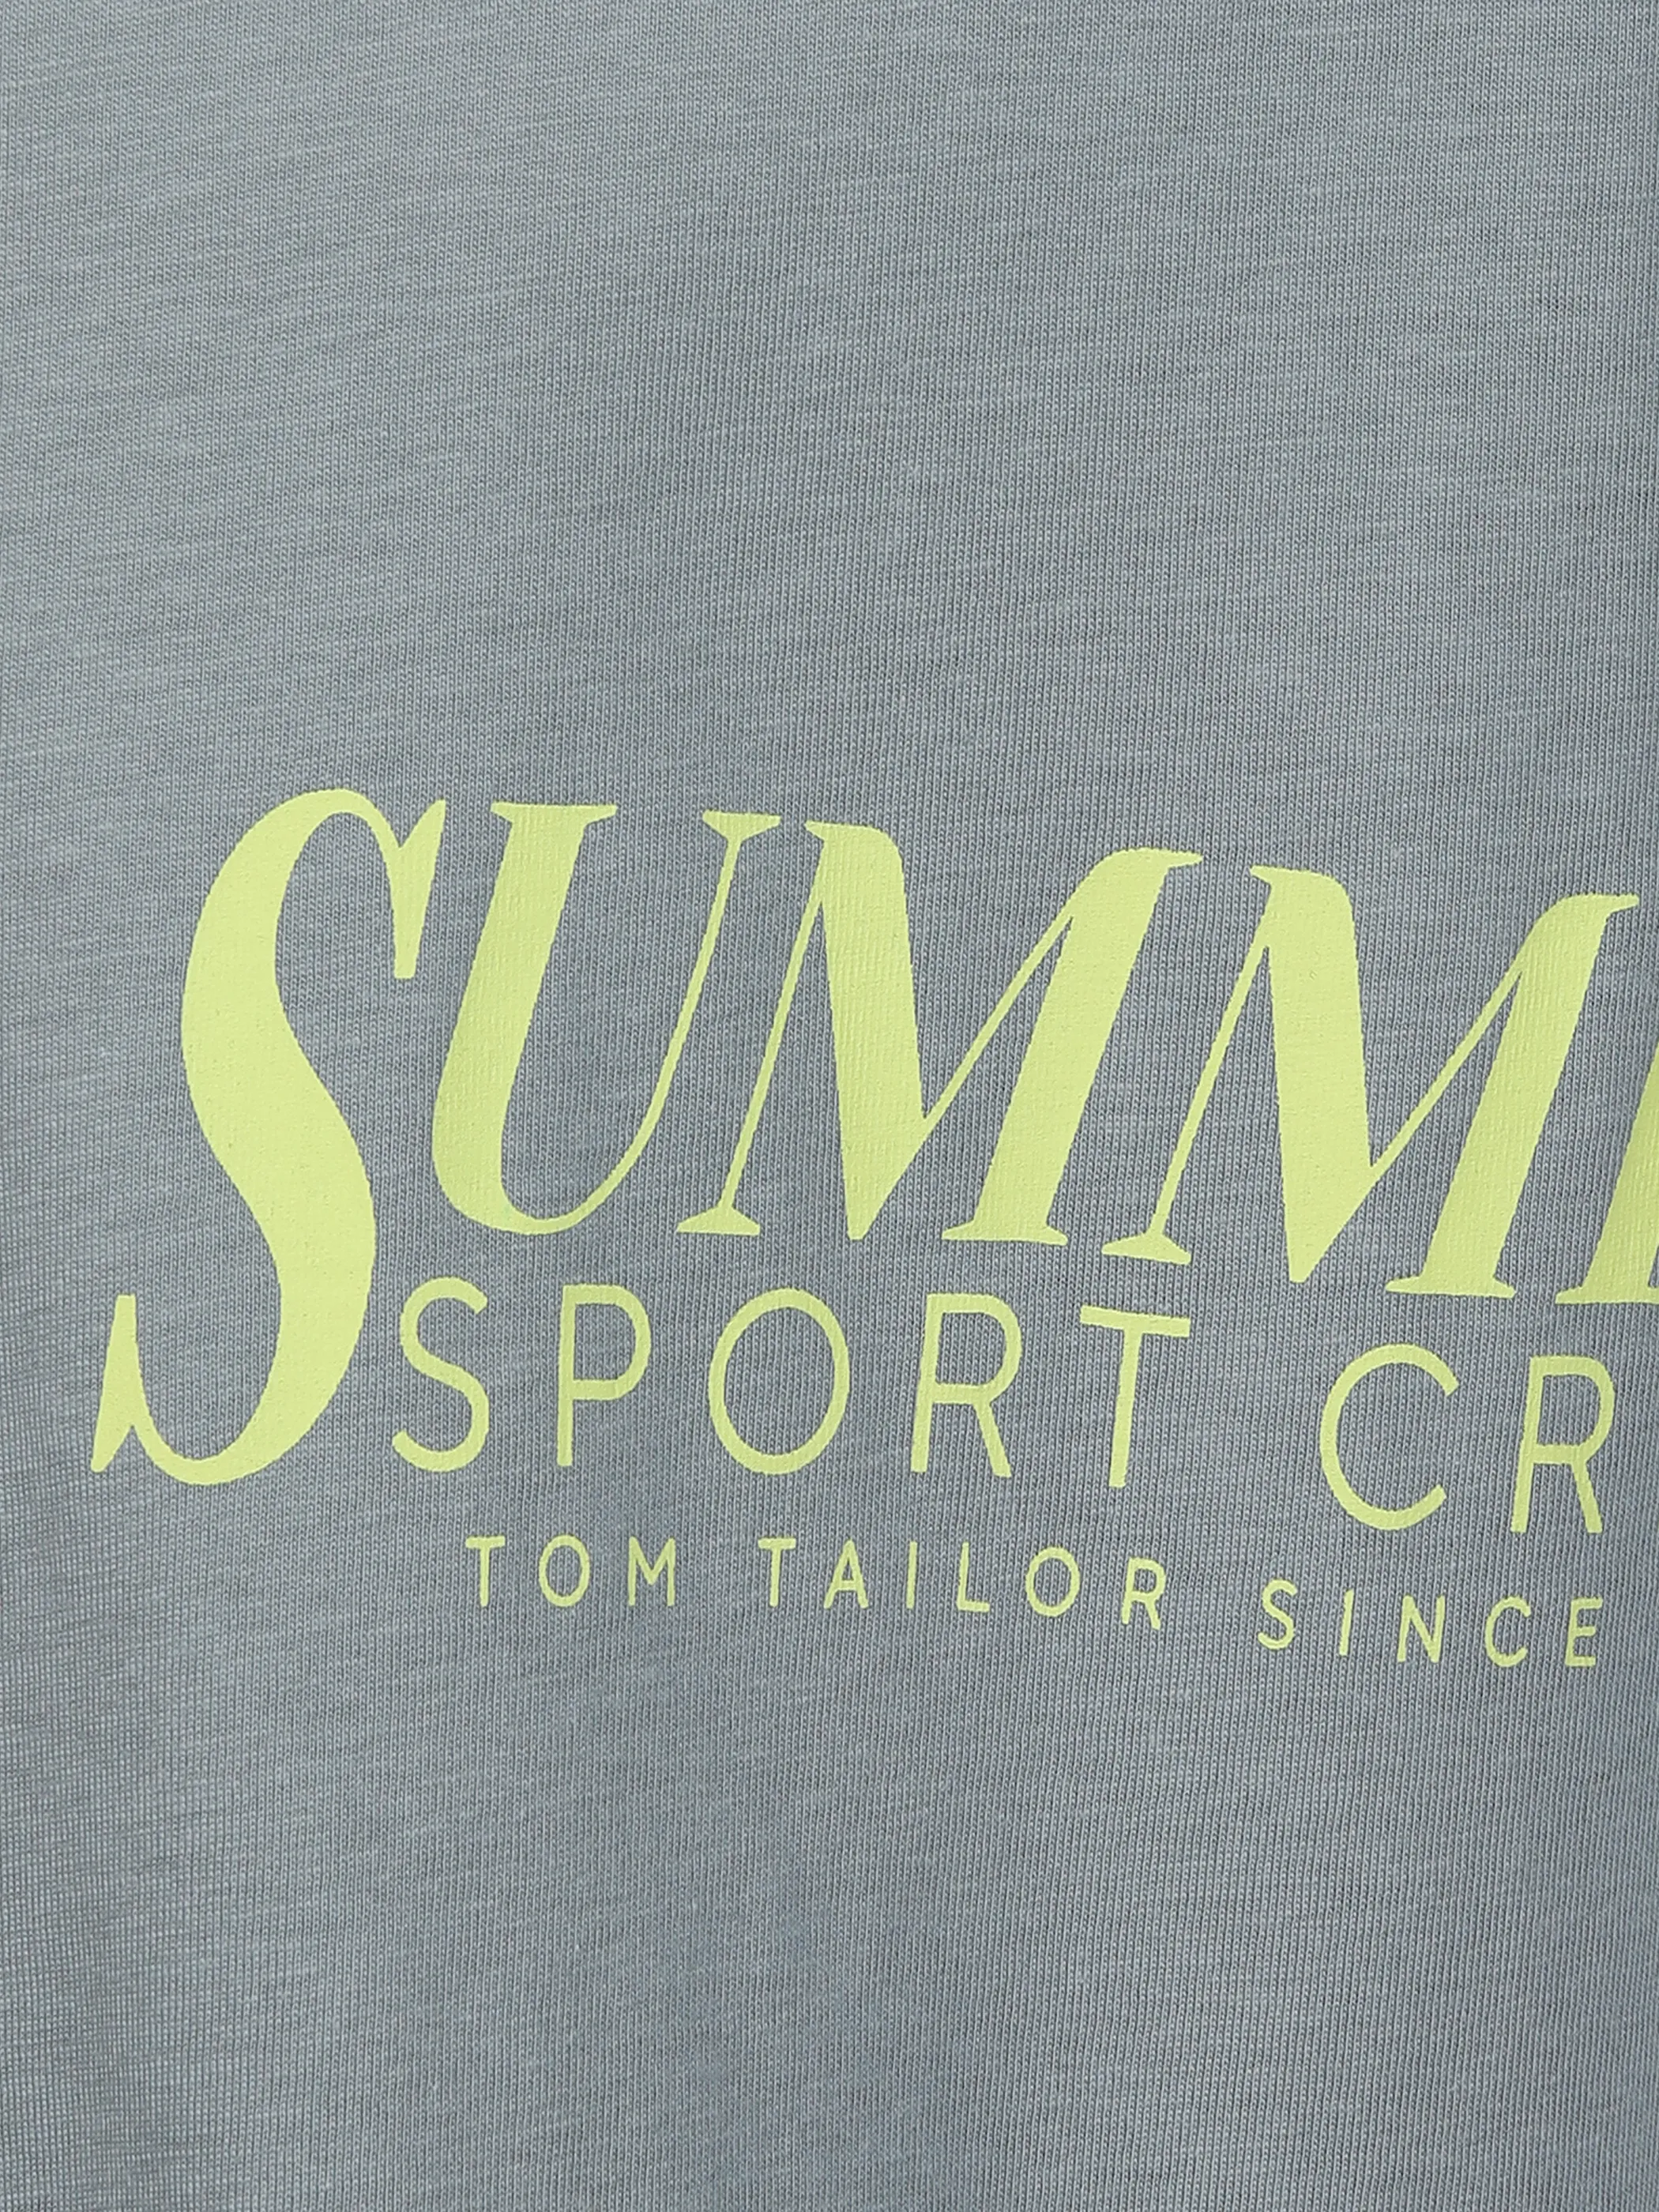 Tom Tailor 1031677 regular printed t-shir Grün 865835 12960 3